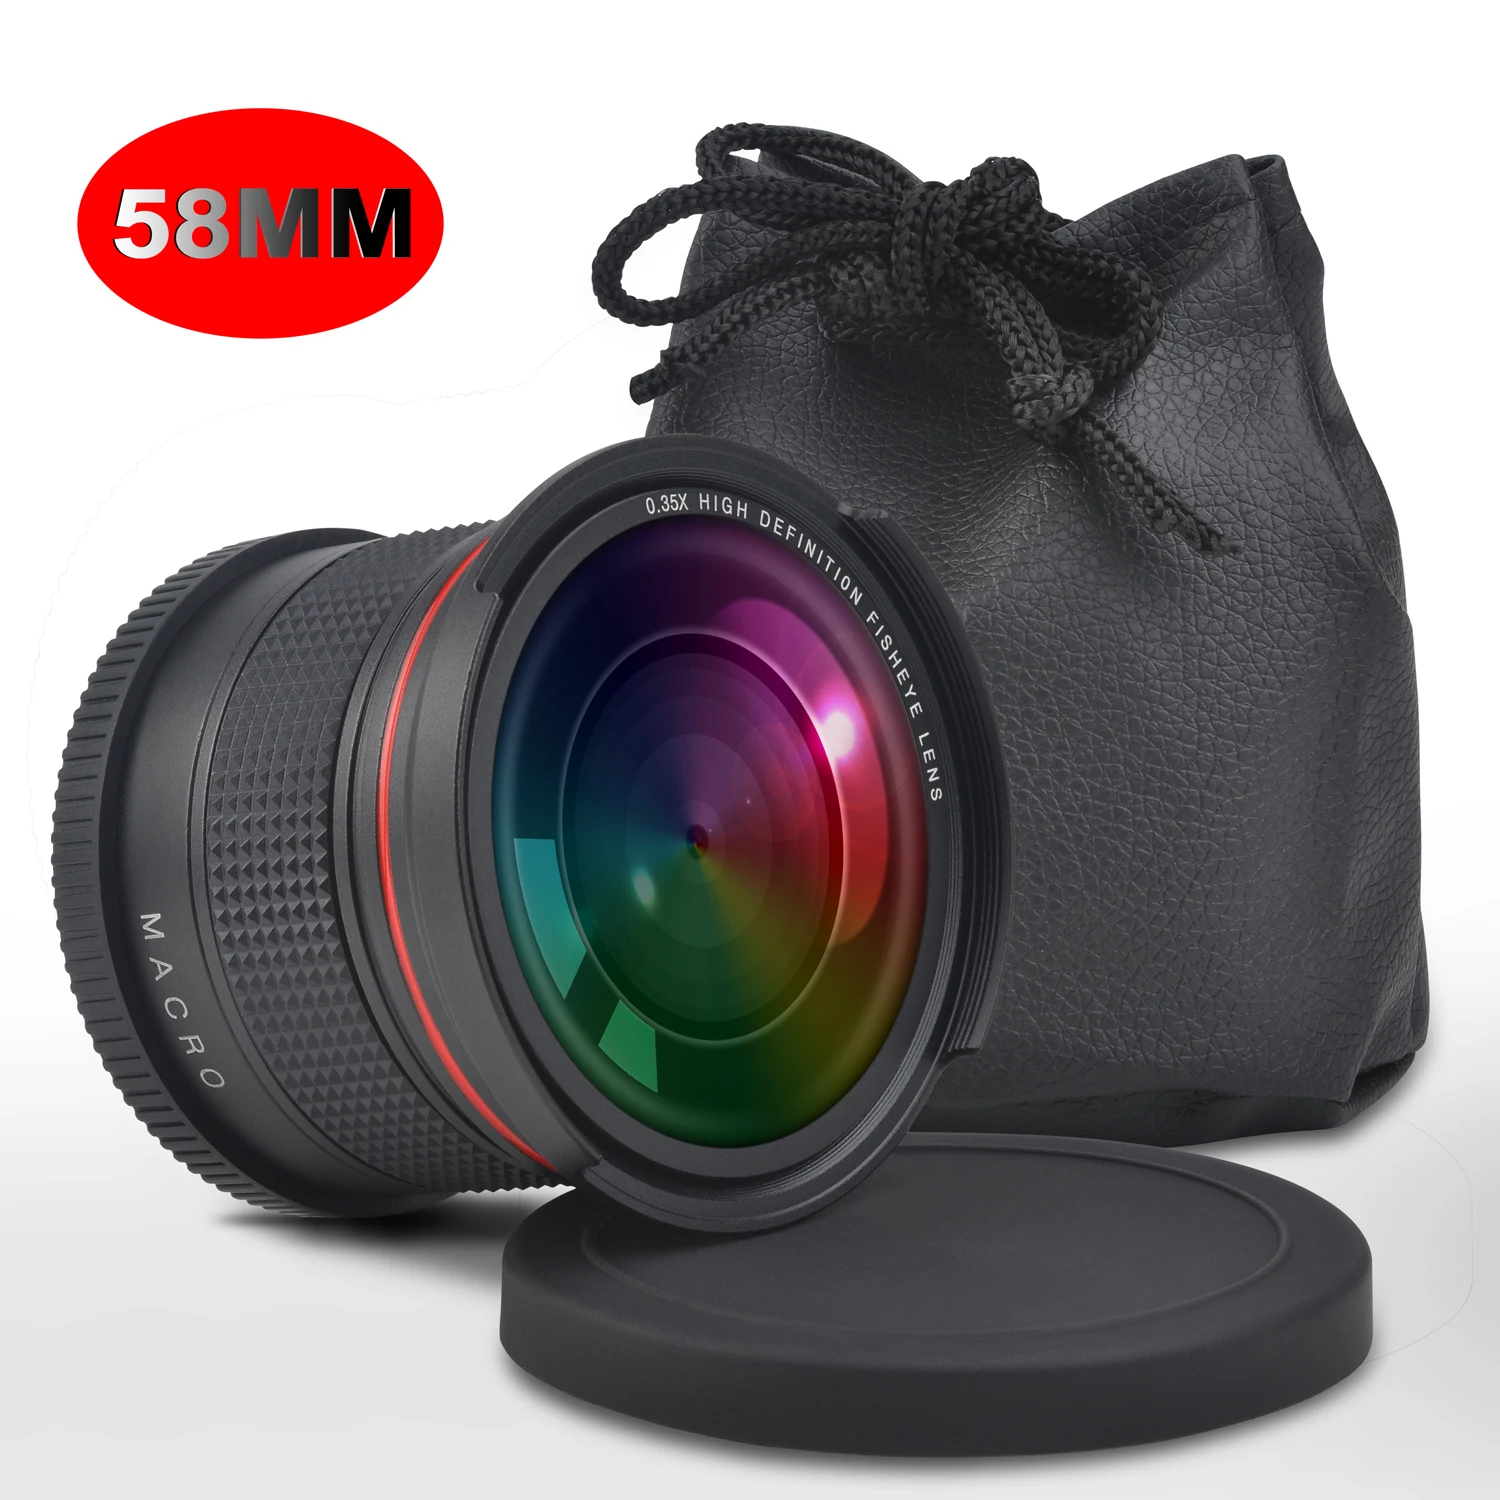 58MM 0.35x Fisheye Canon Wide Angle Lens (w/Macro Portion) f